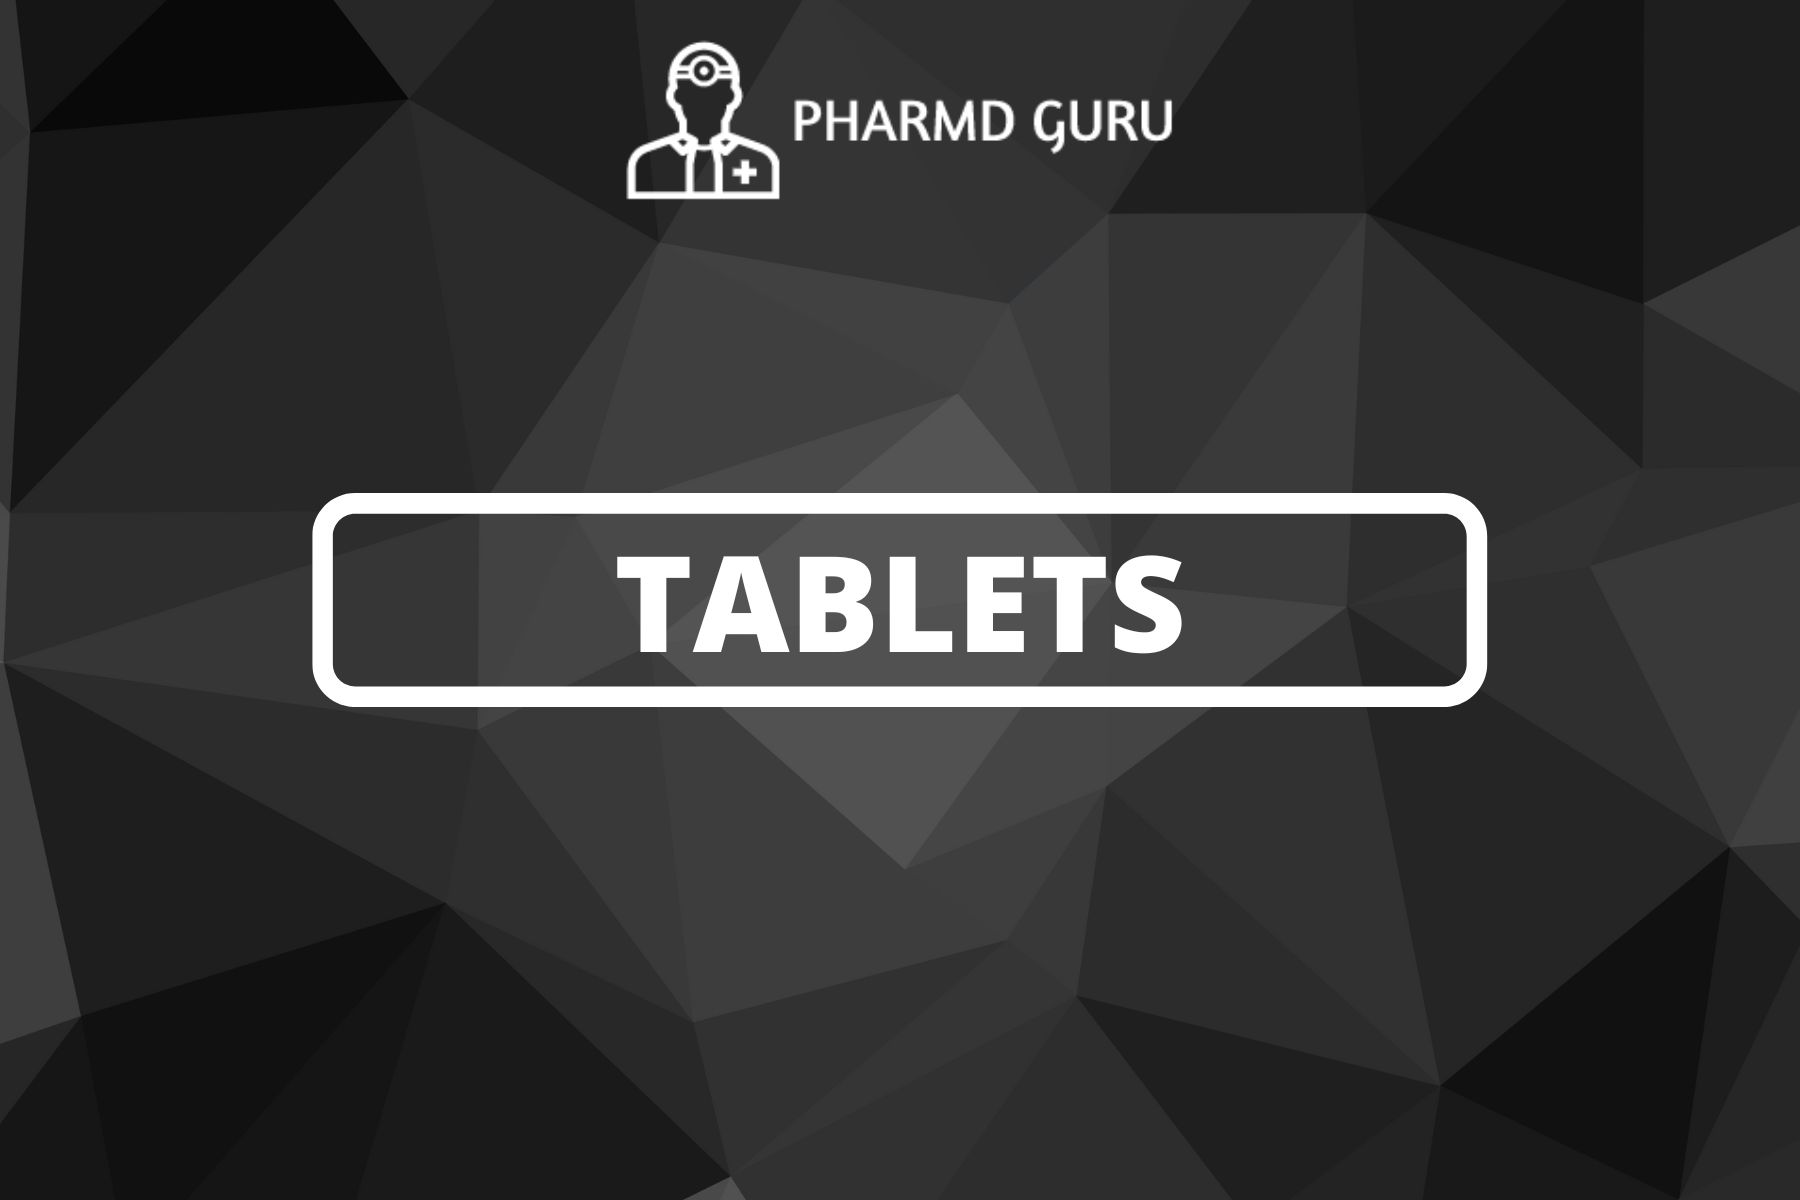 2. TABLETS - PHARMD GURU